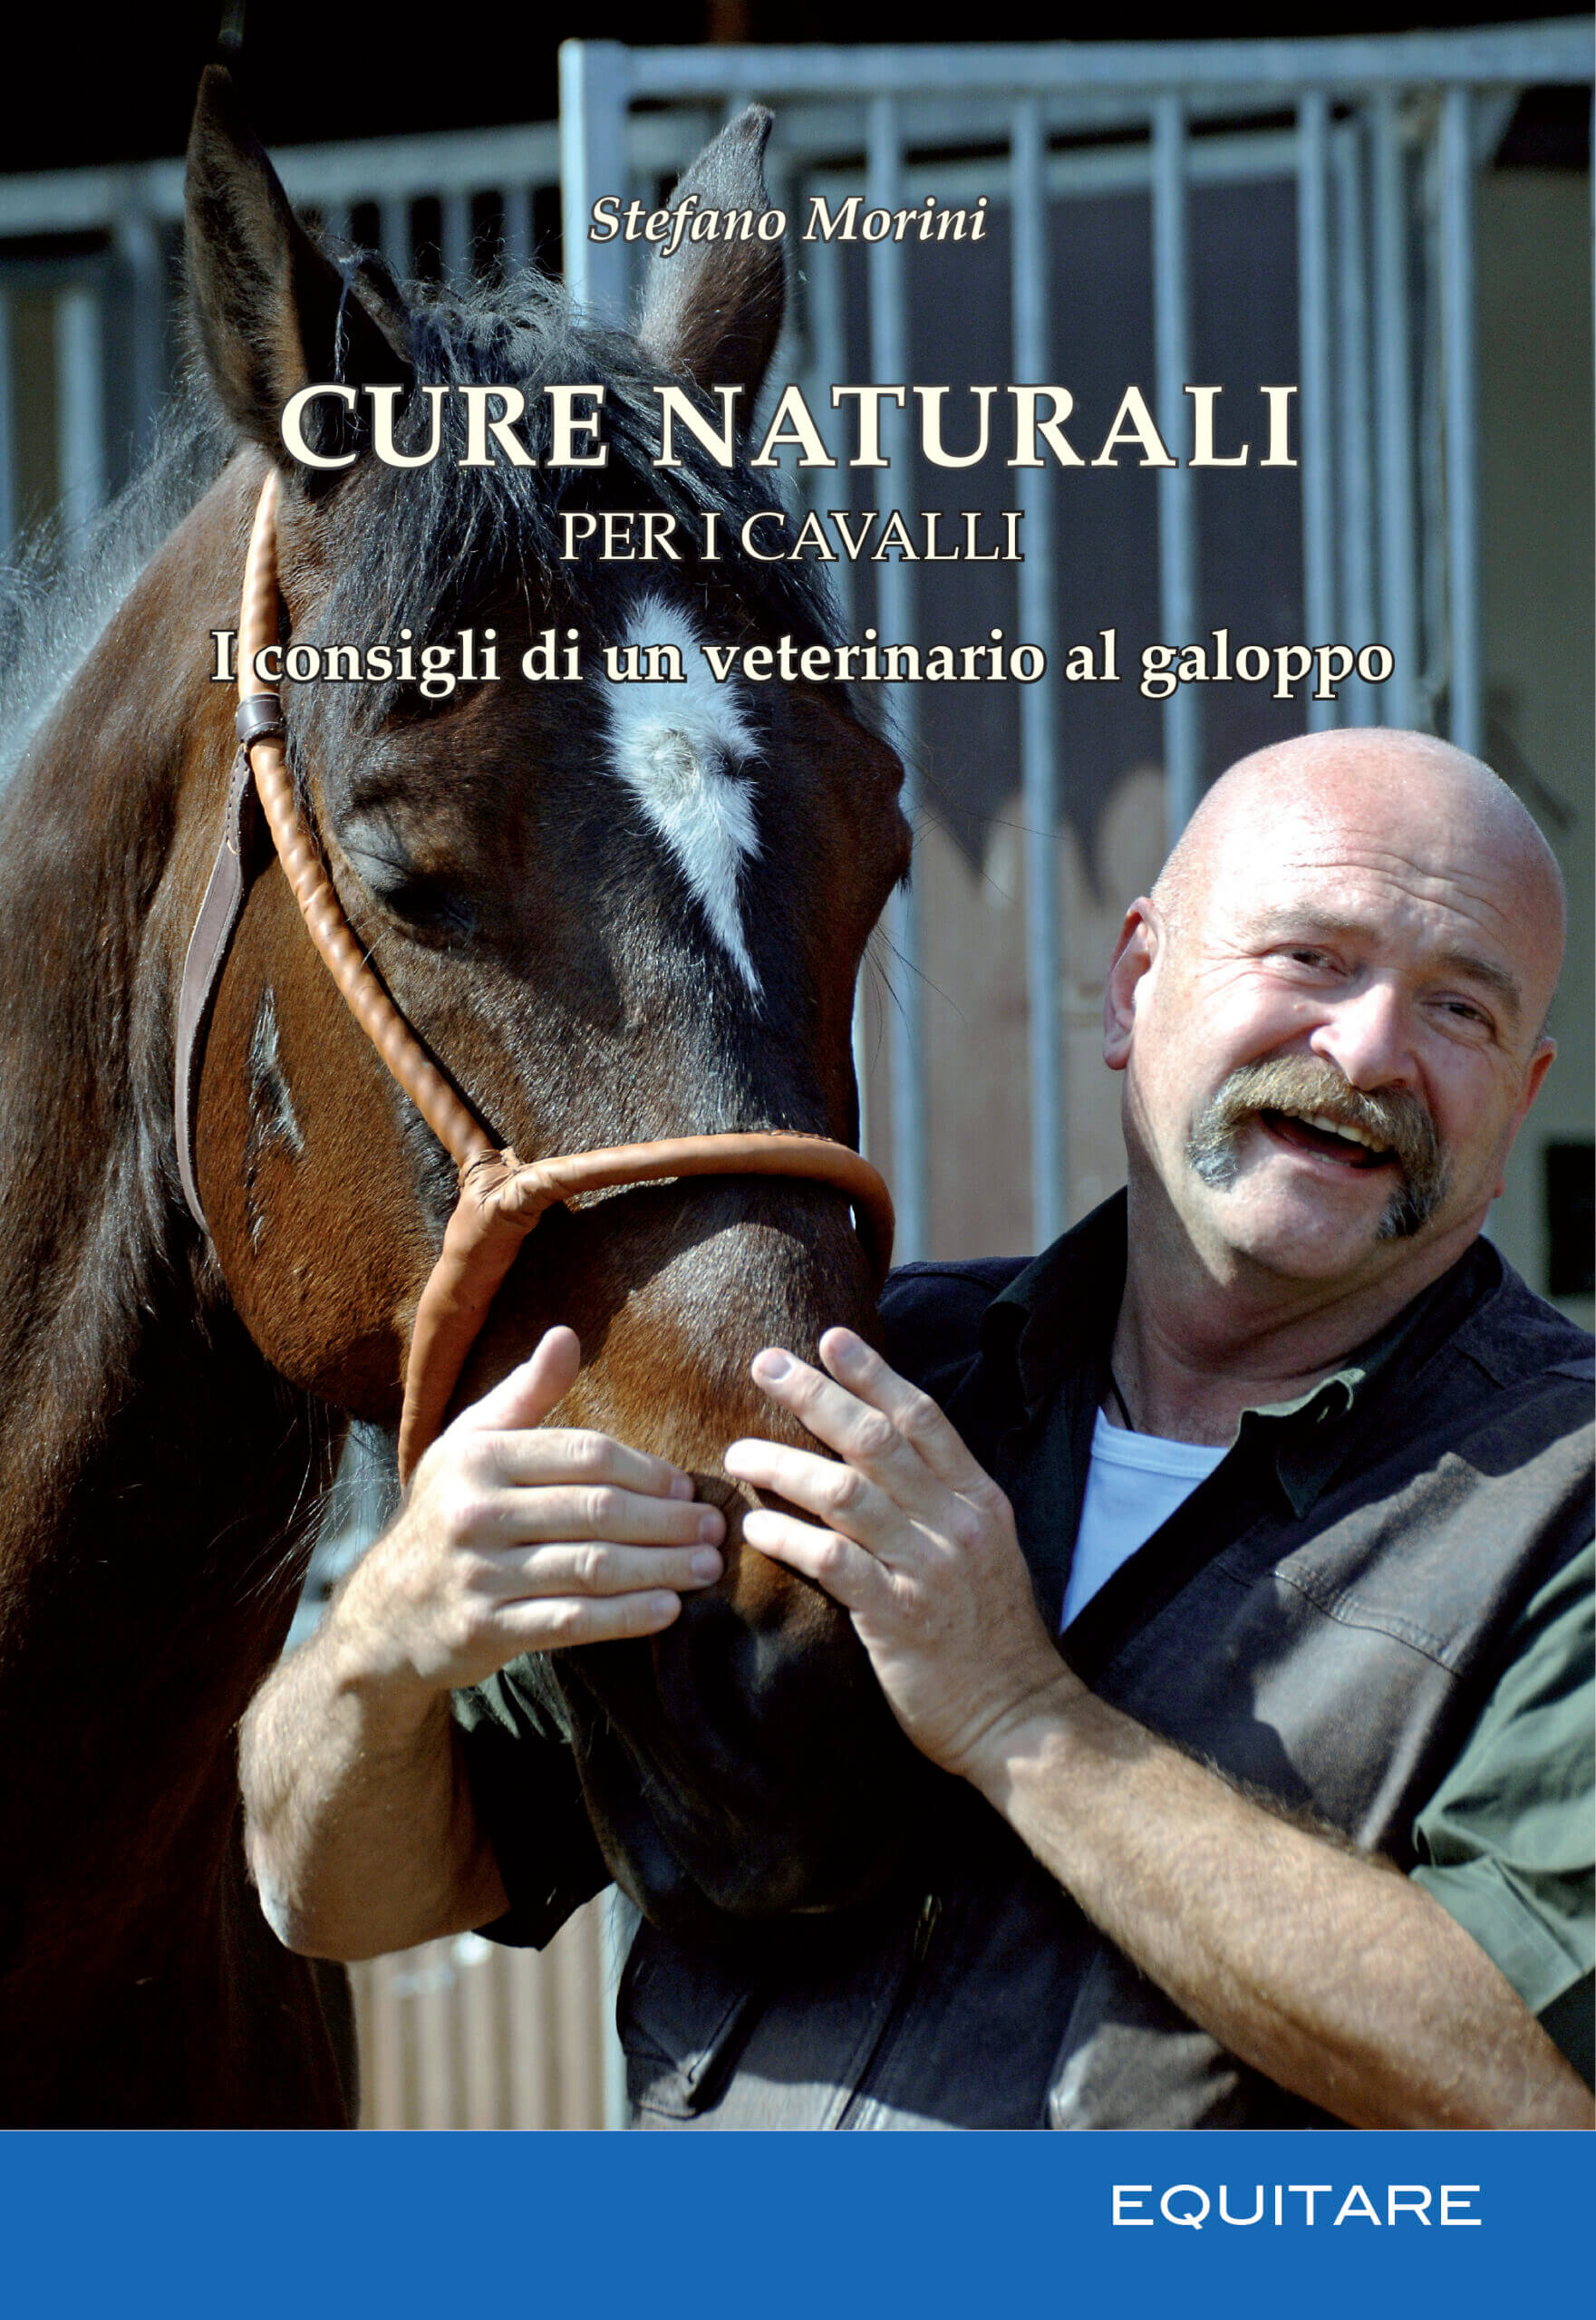 Cure naturali per i cavalli - Stefano Morini, versione digitale PDF